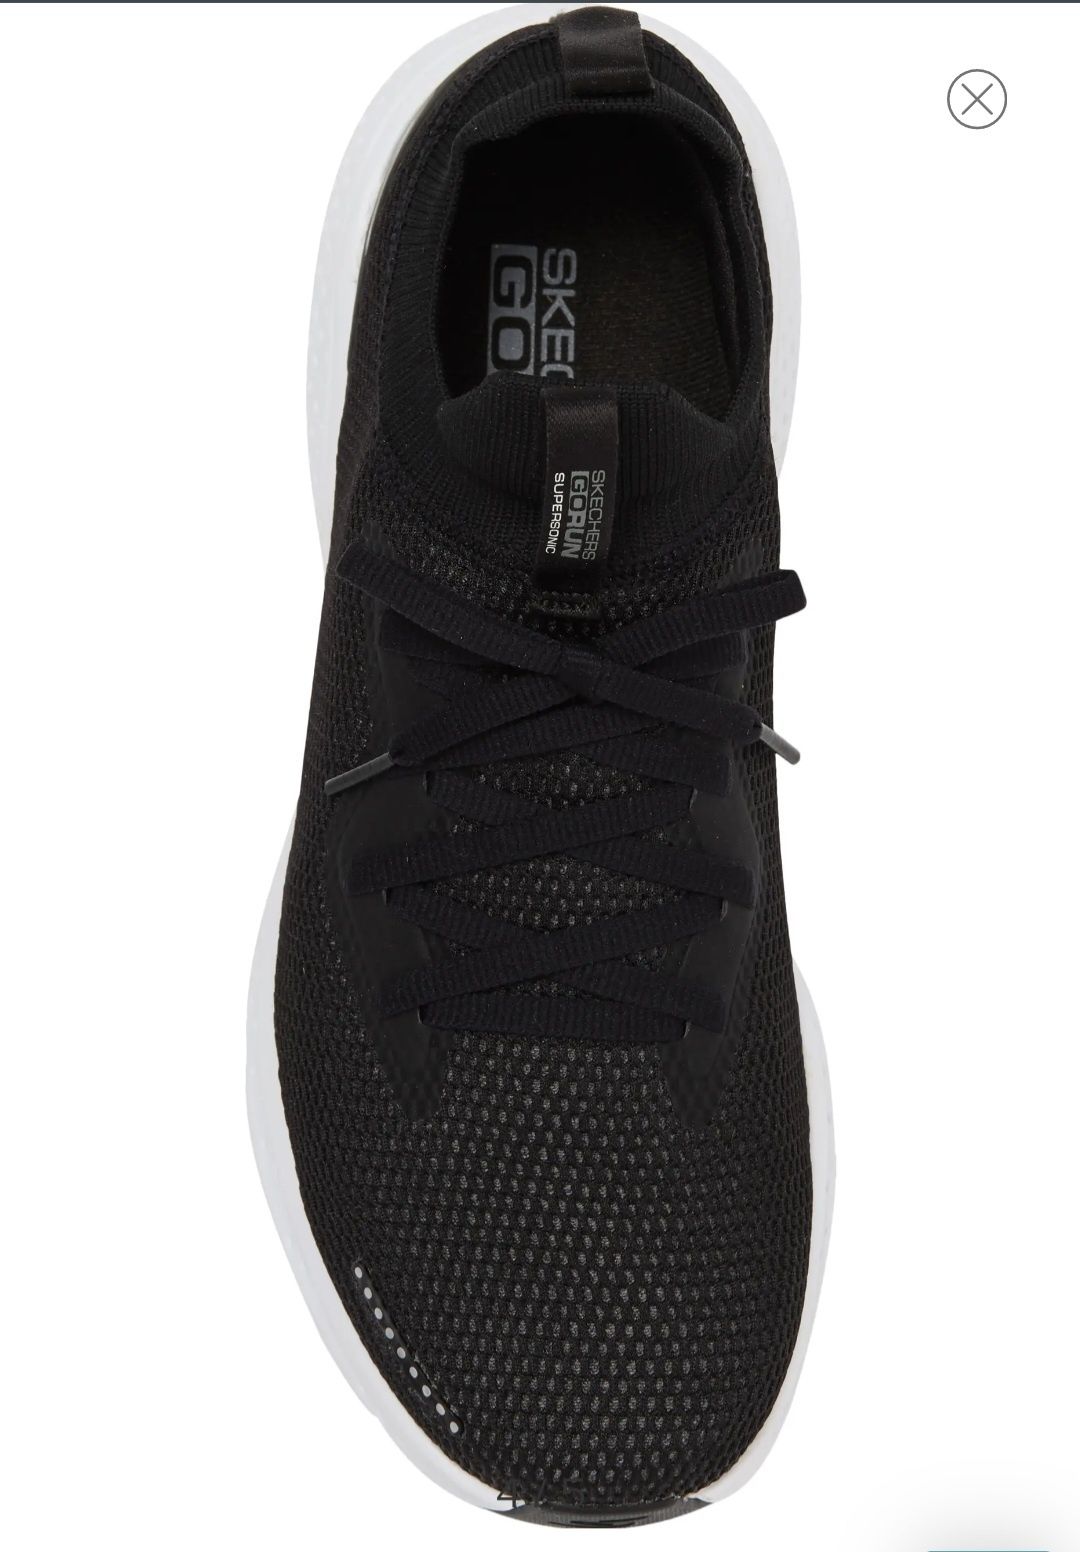 Adidasi SKECHERS 
Go Run Supersonic - Apex Athletic Sneaker (Men)
SKEC